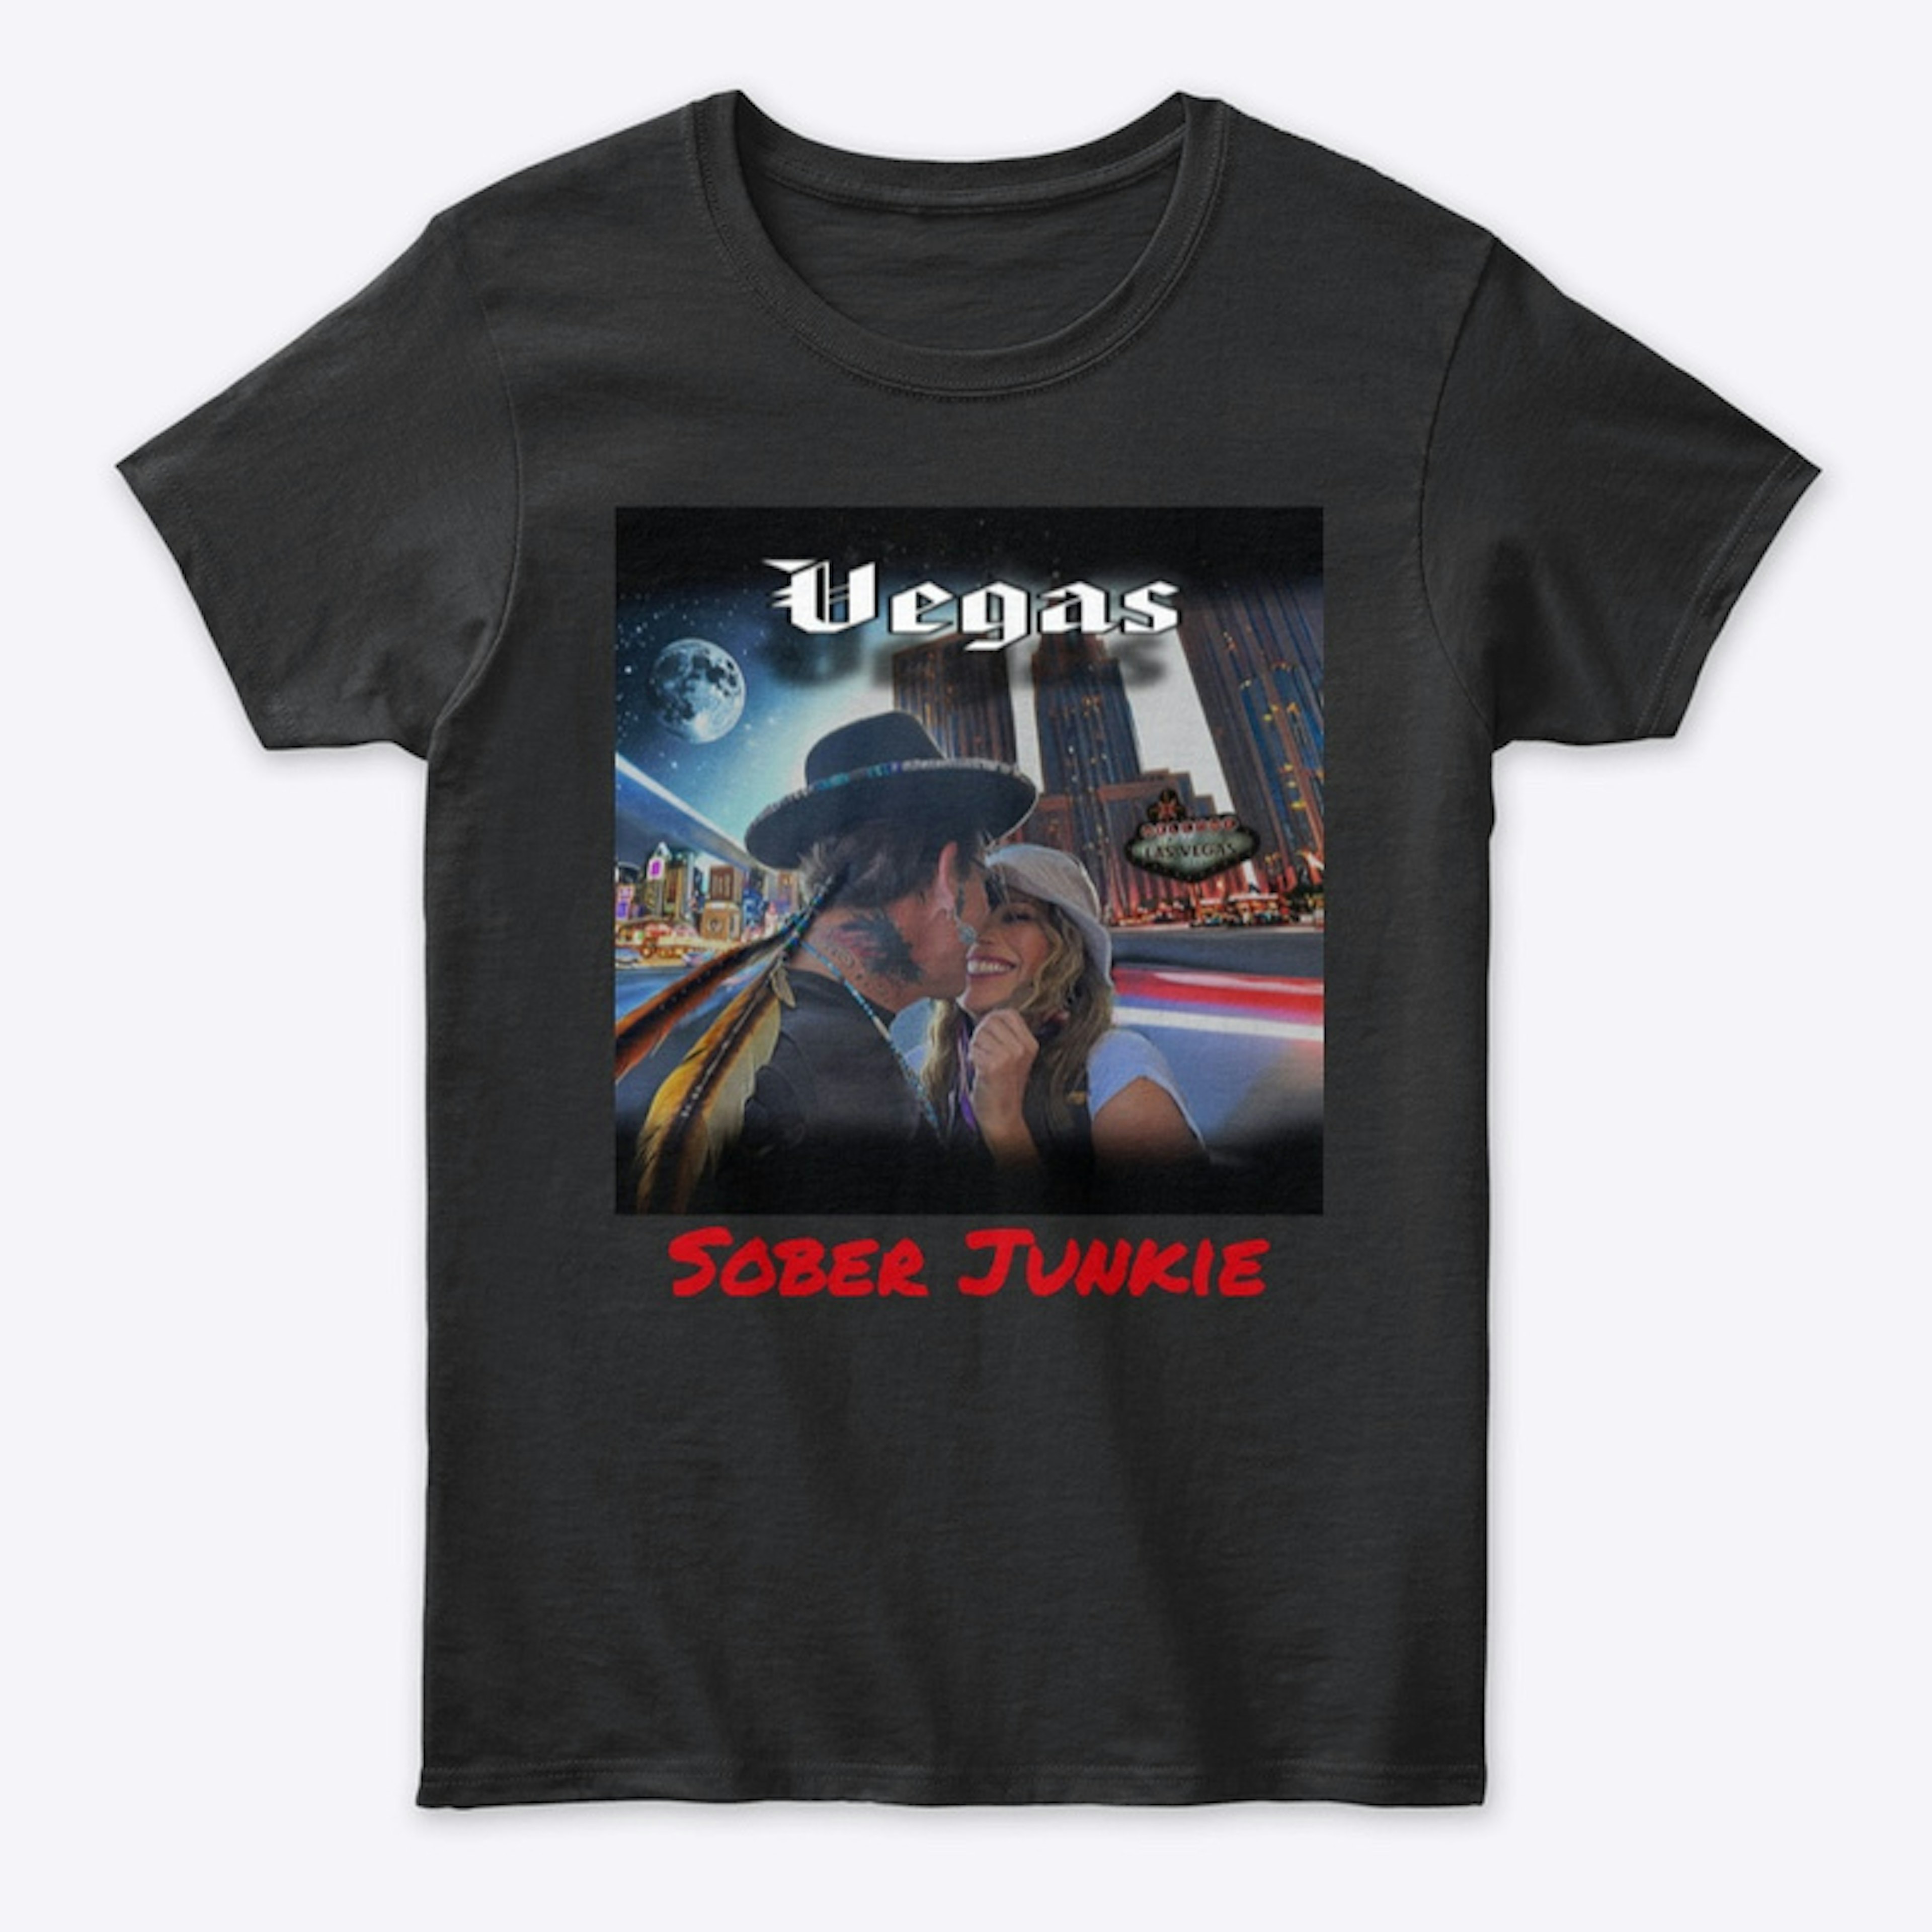 Sober Junkie " Vegas" Merchandise